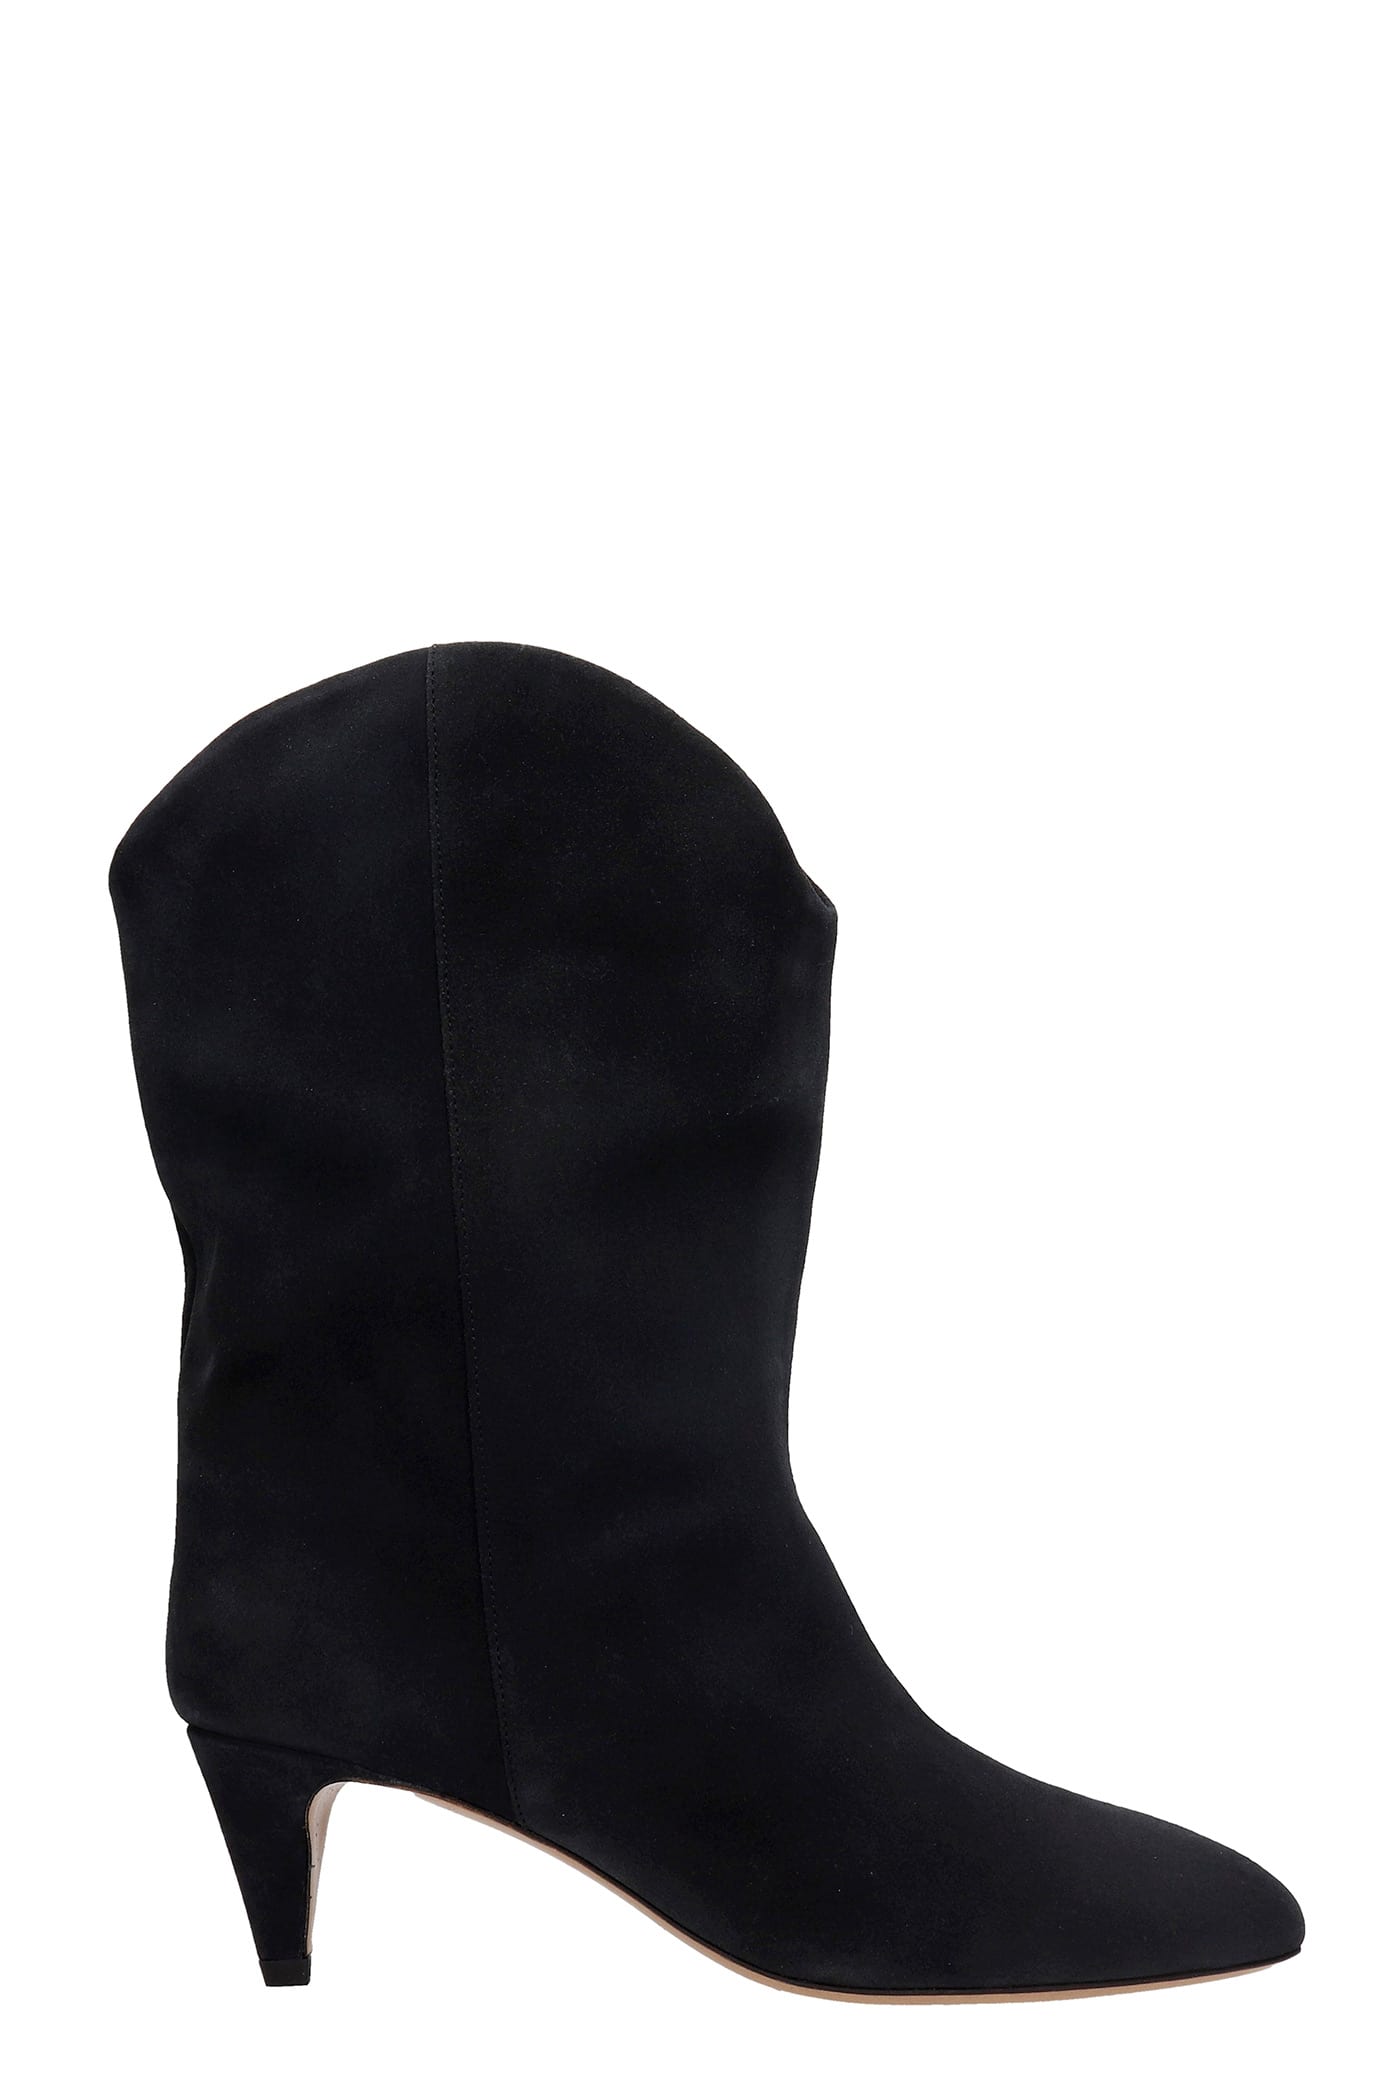 Isabel Marant Denree High Heels Ankle Boots In Black Suede